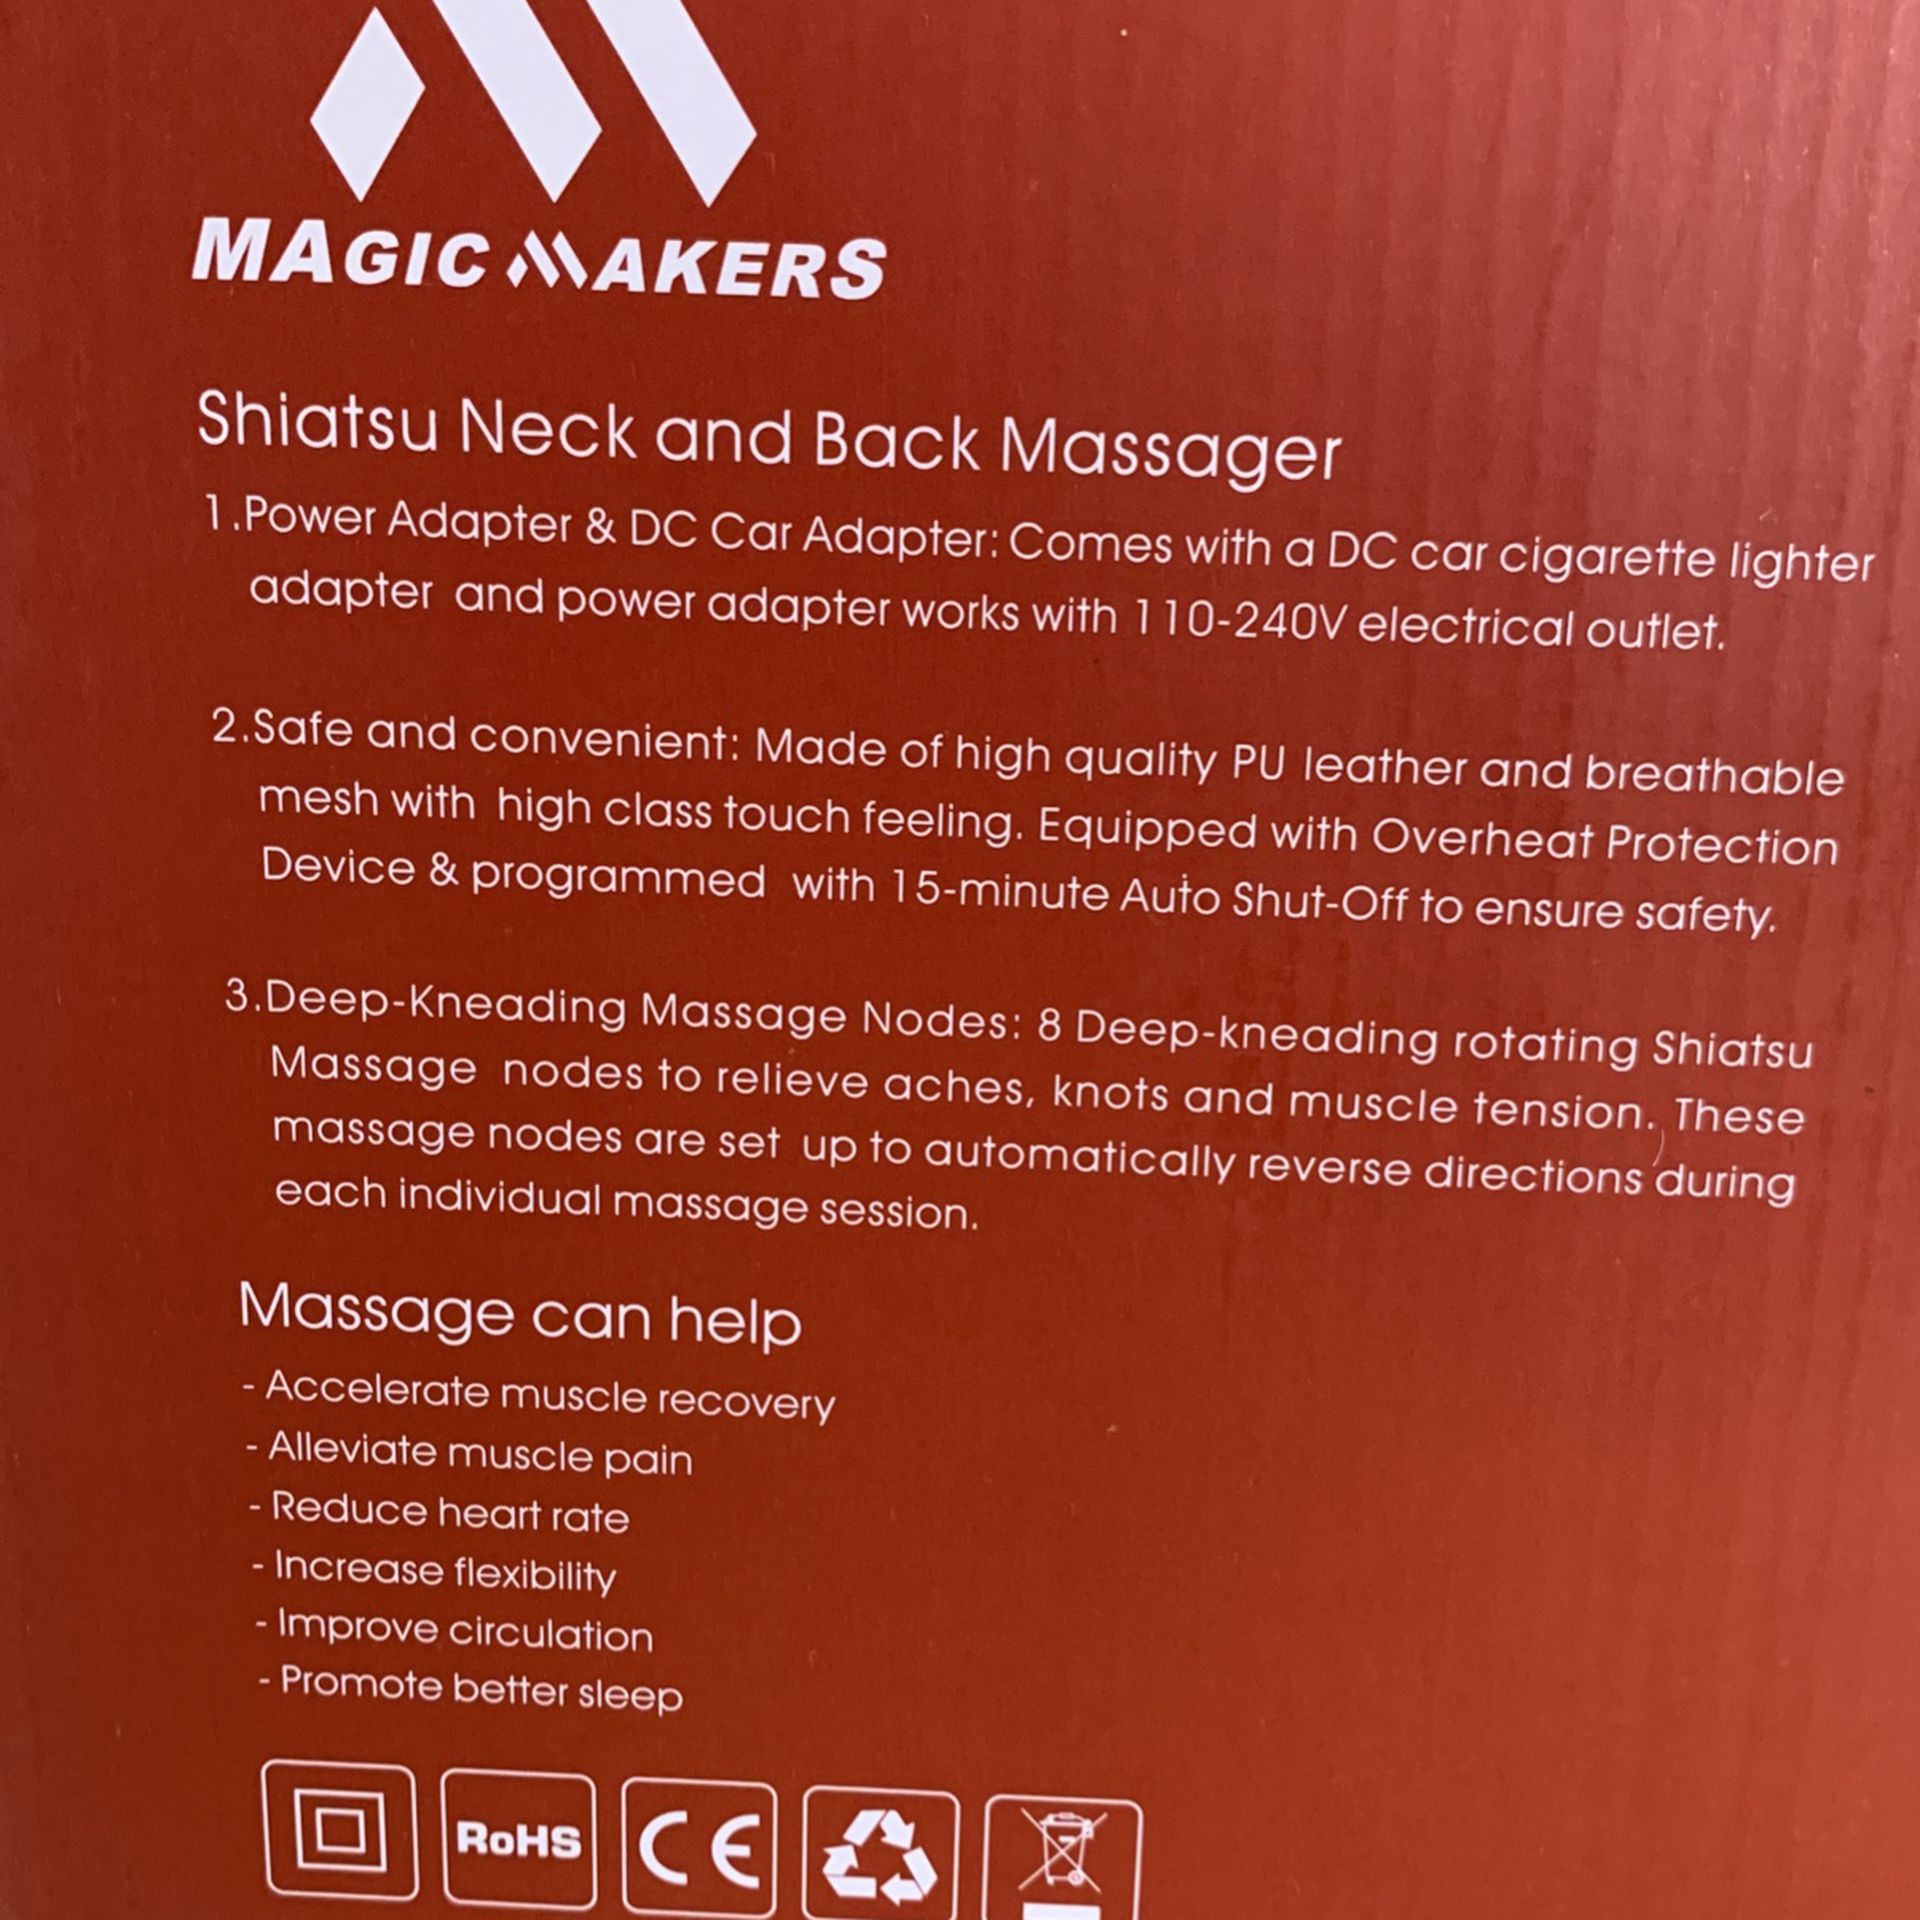 magic makers shiatsu neck and back massager model m-blt-050 – Best